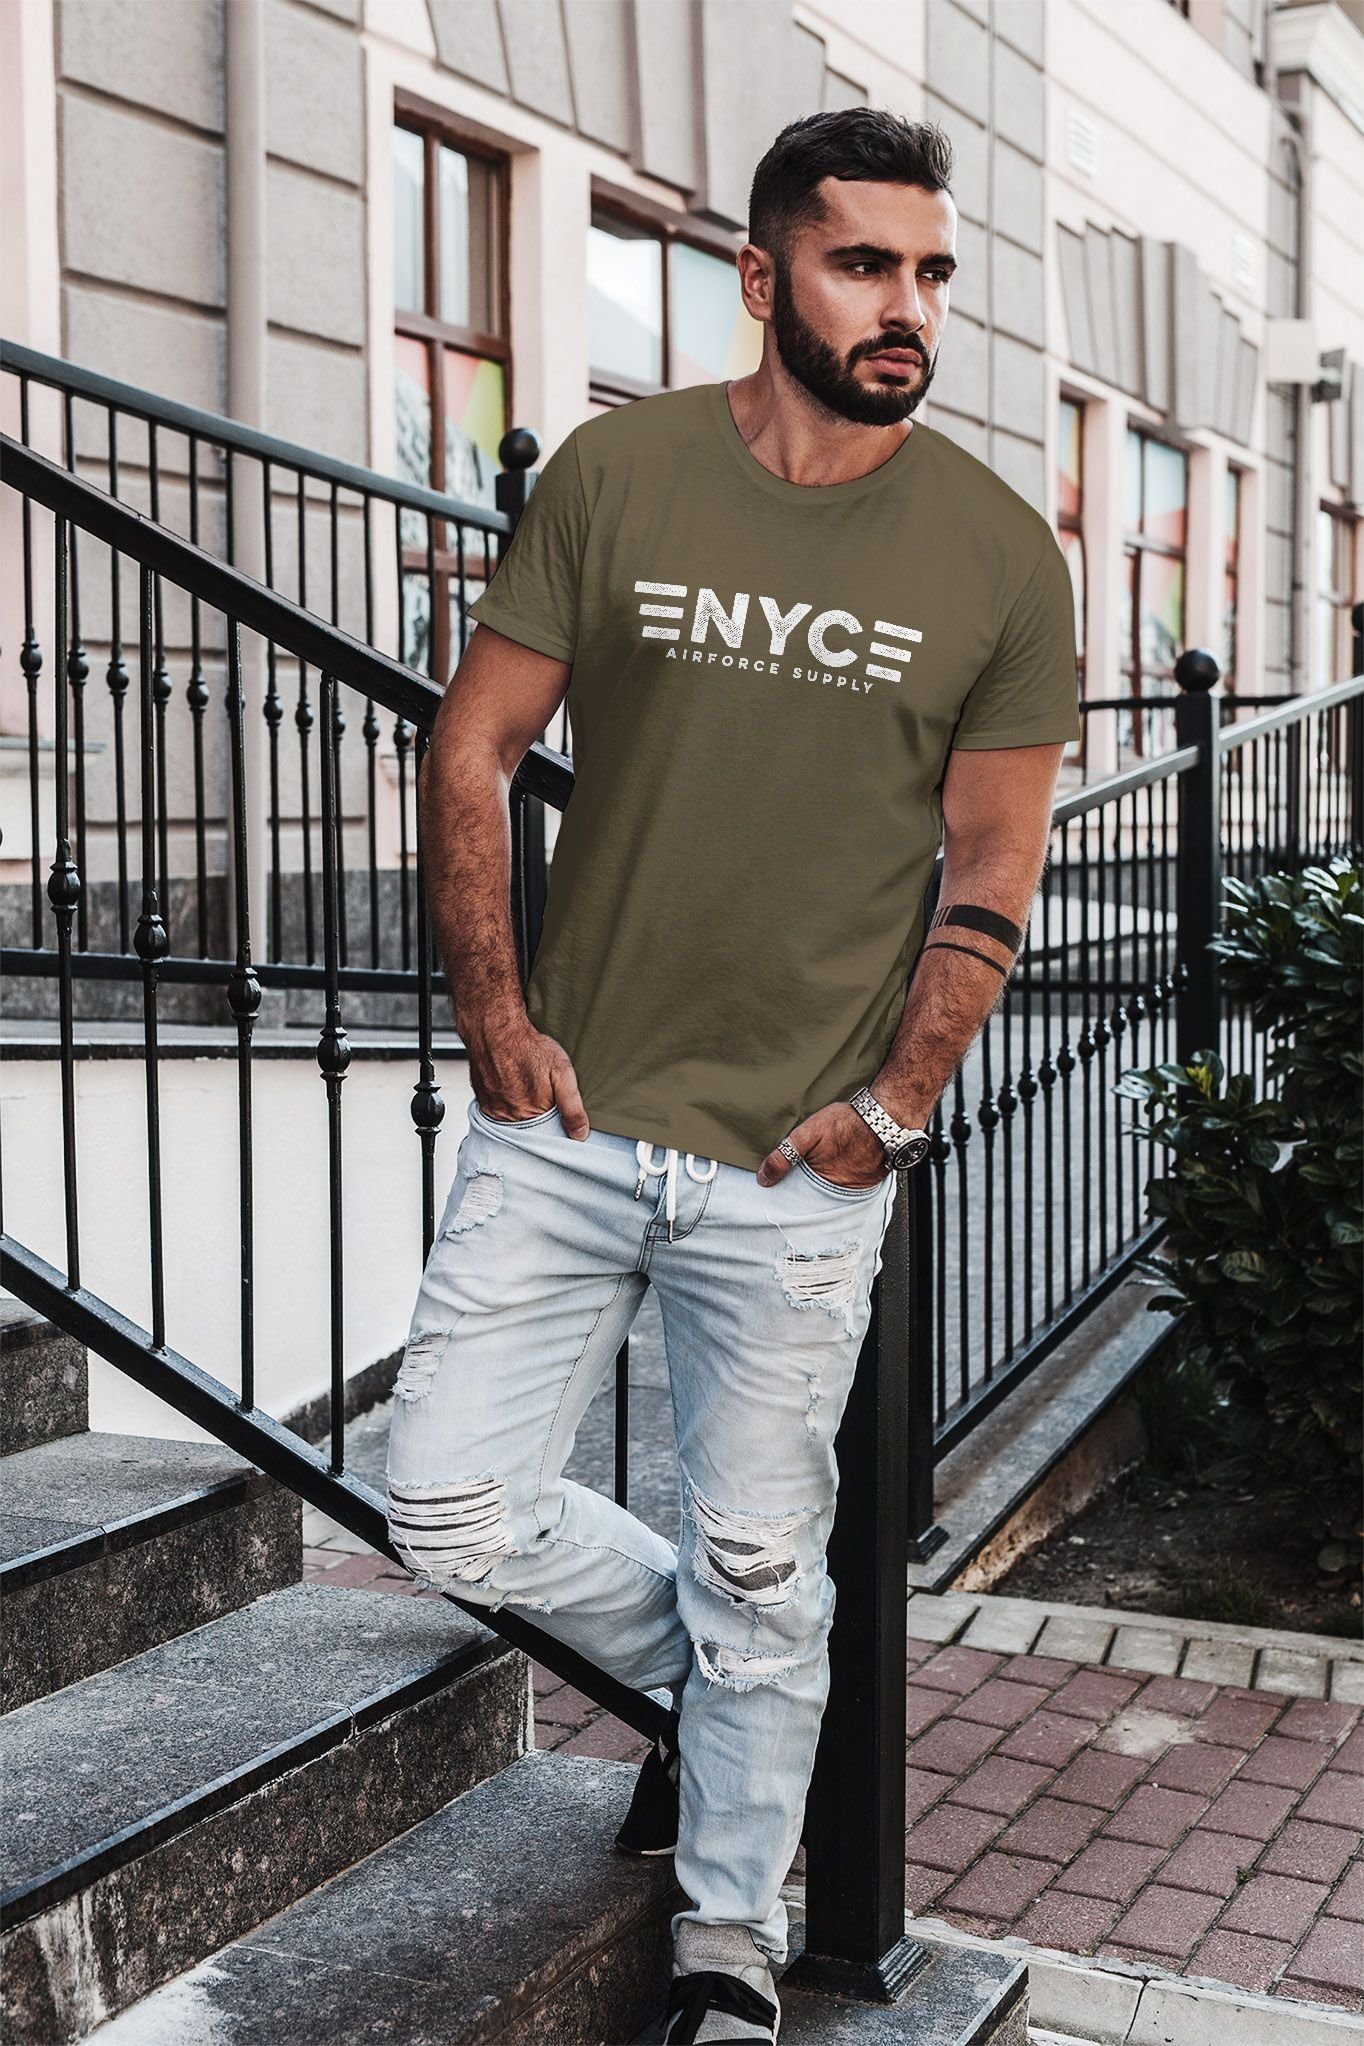 Neverless NYC Print City Army mit Herren Airforce York Neverless® Print New grün T-Shirt Aufdruck Print-Shirt Supply